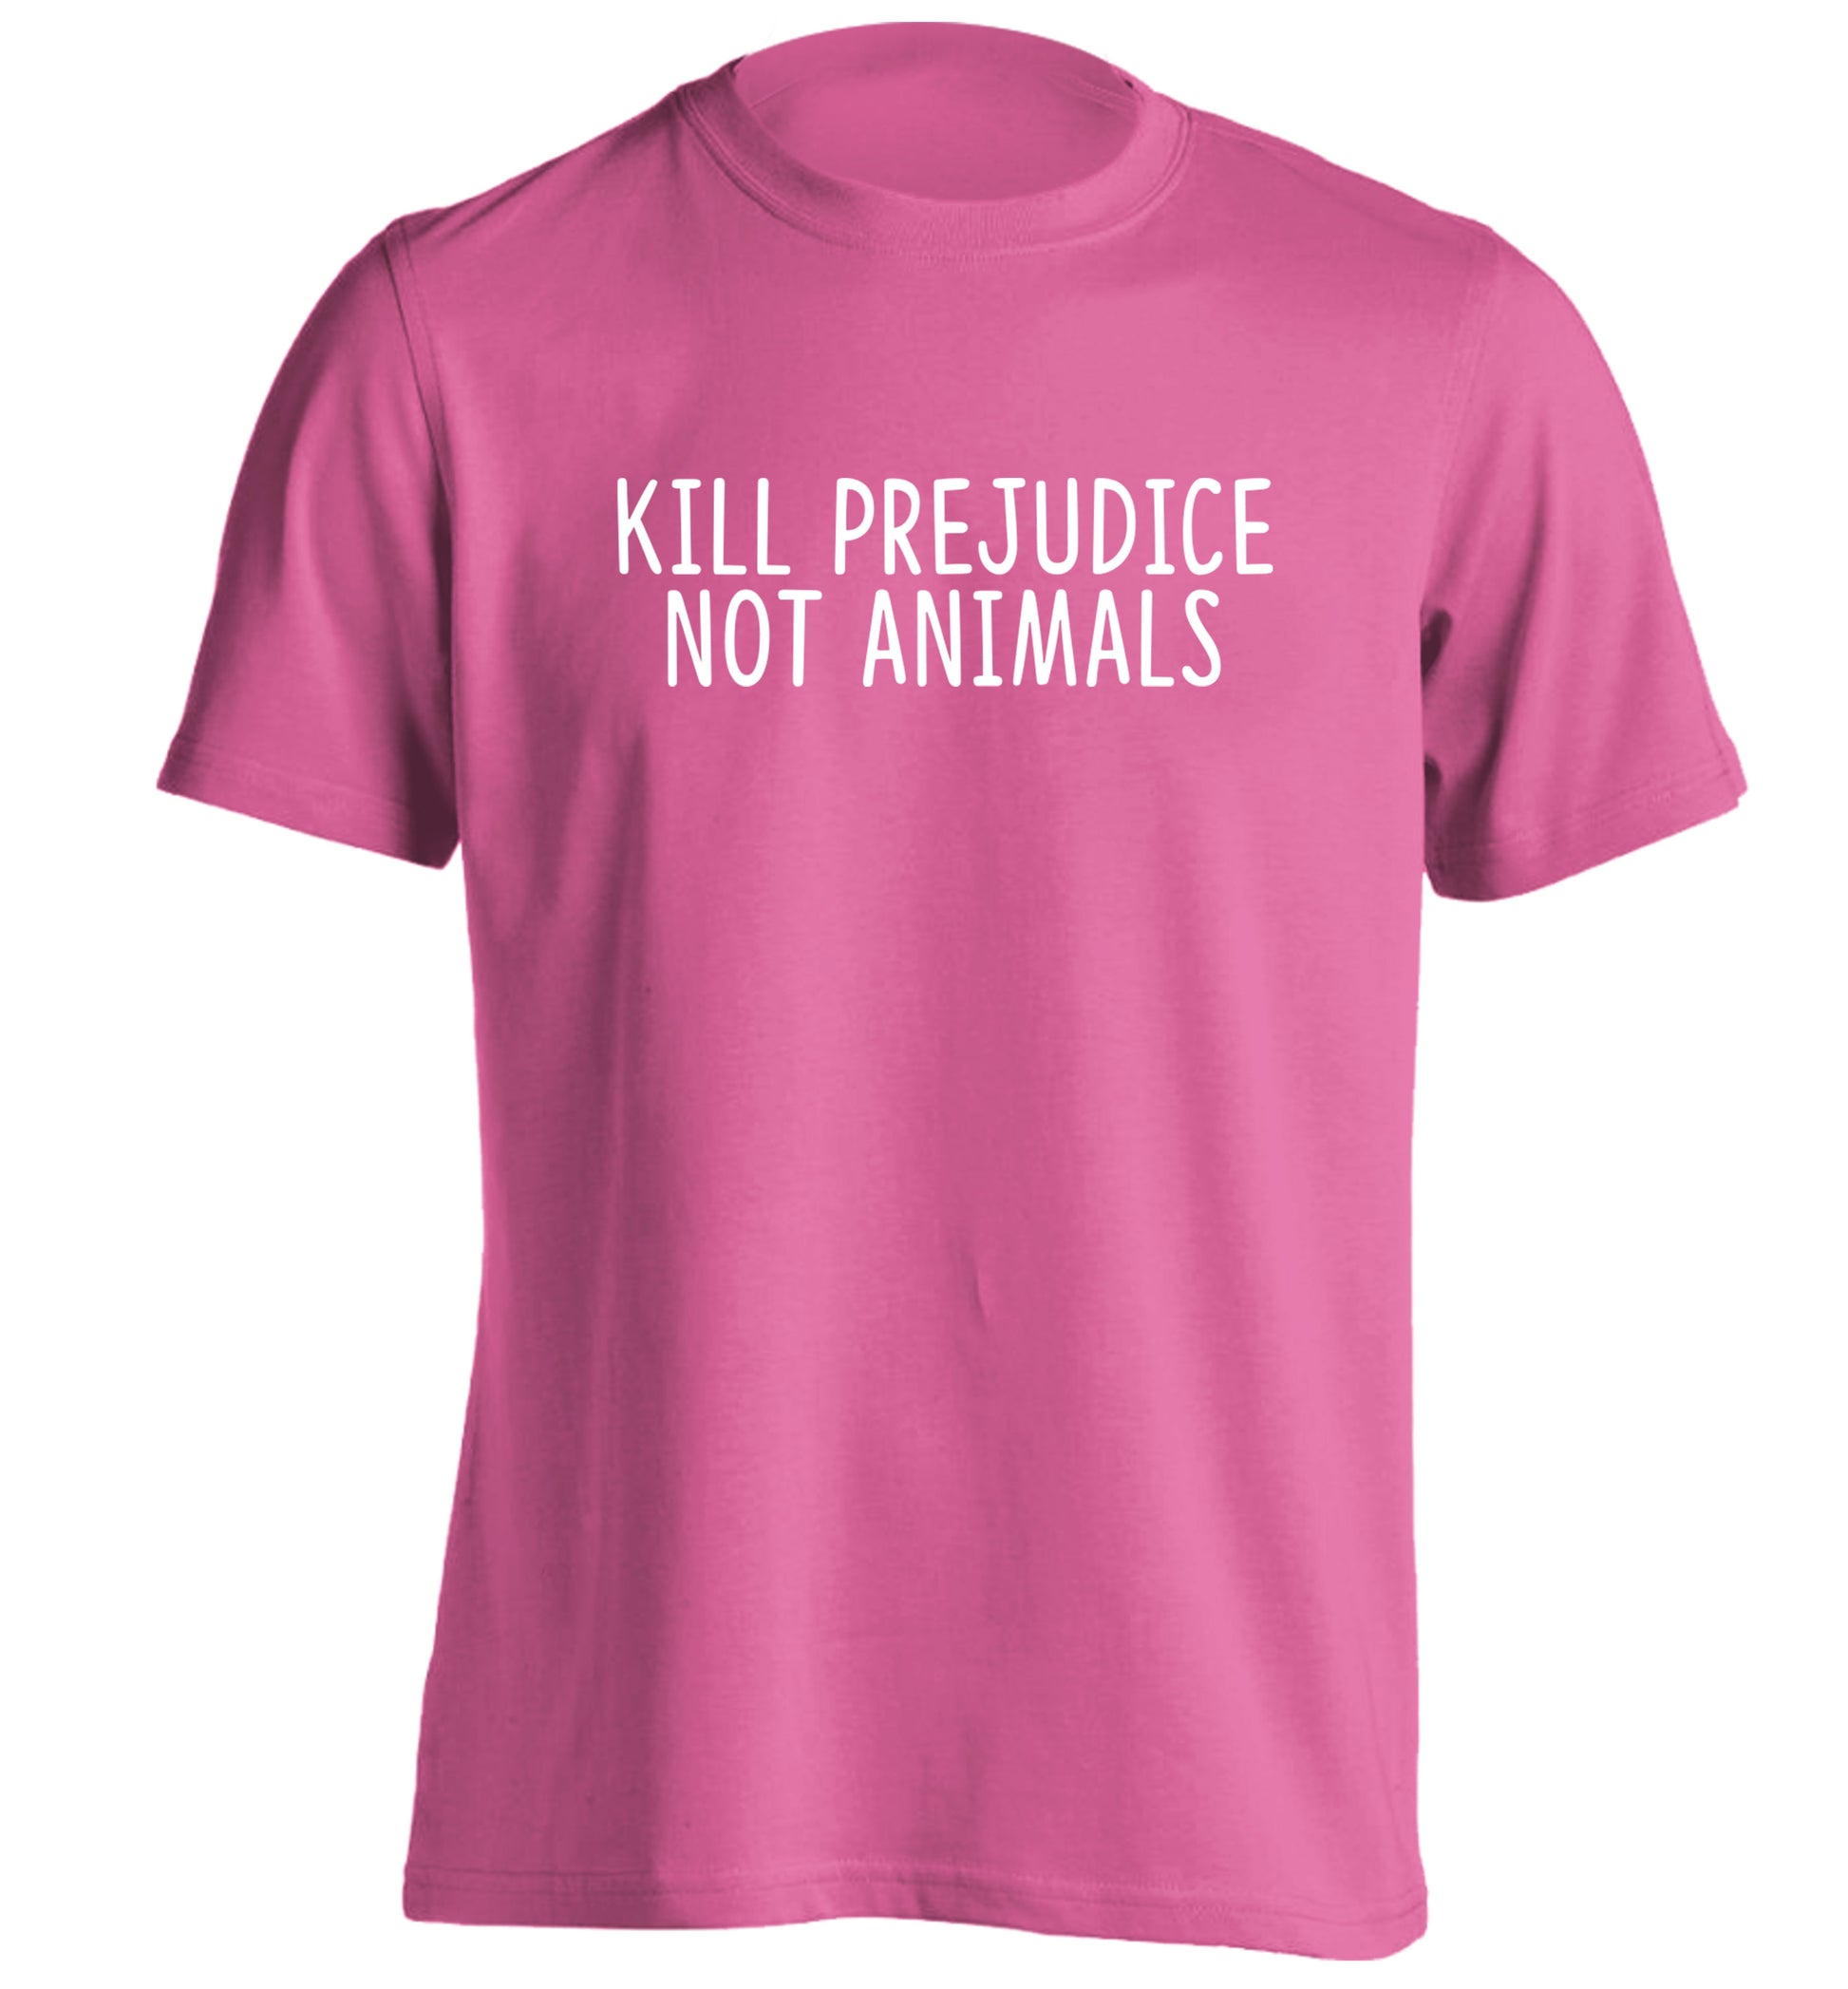 Kill Prejudice Not Animals adults unisex pink Tshirt 2XL